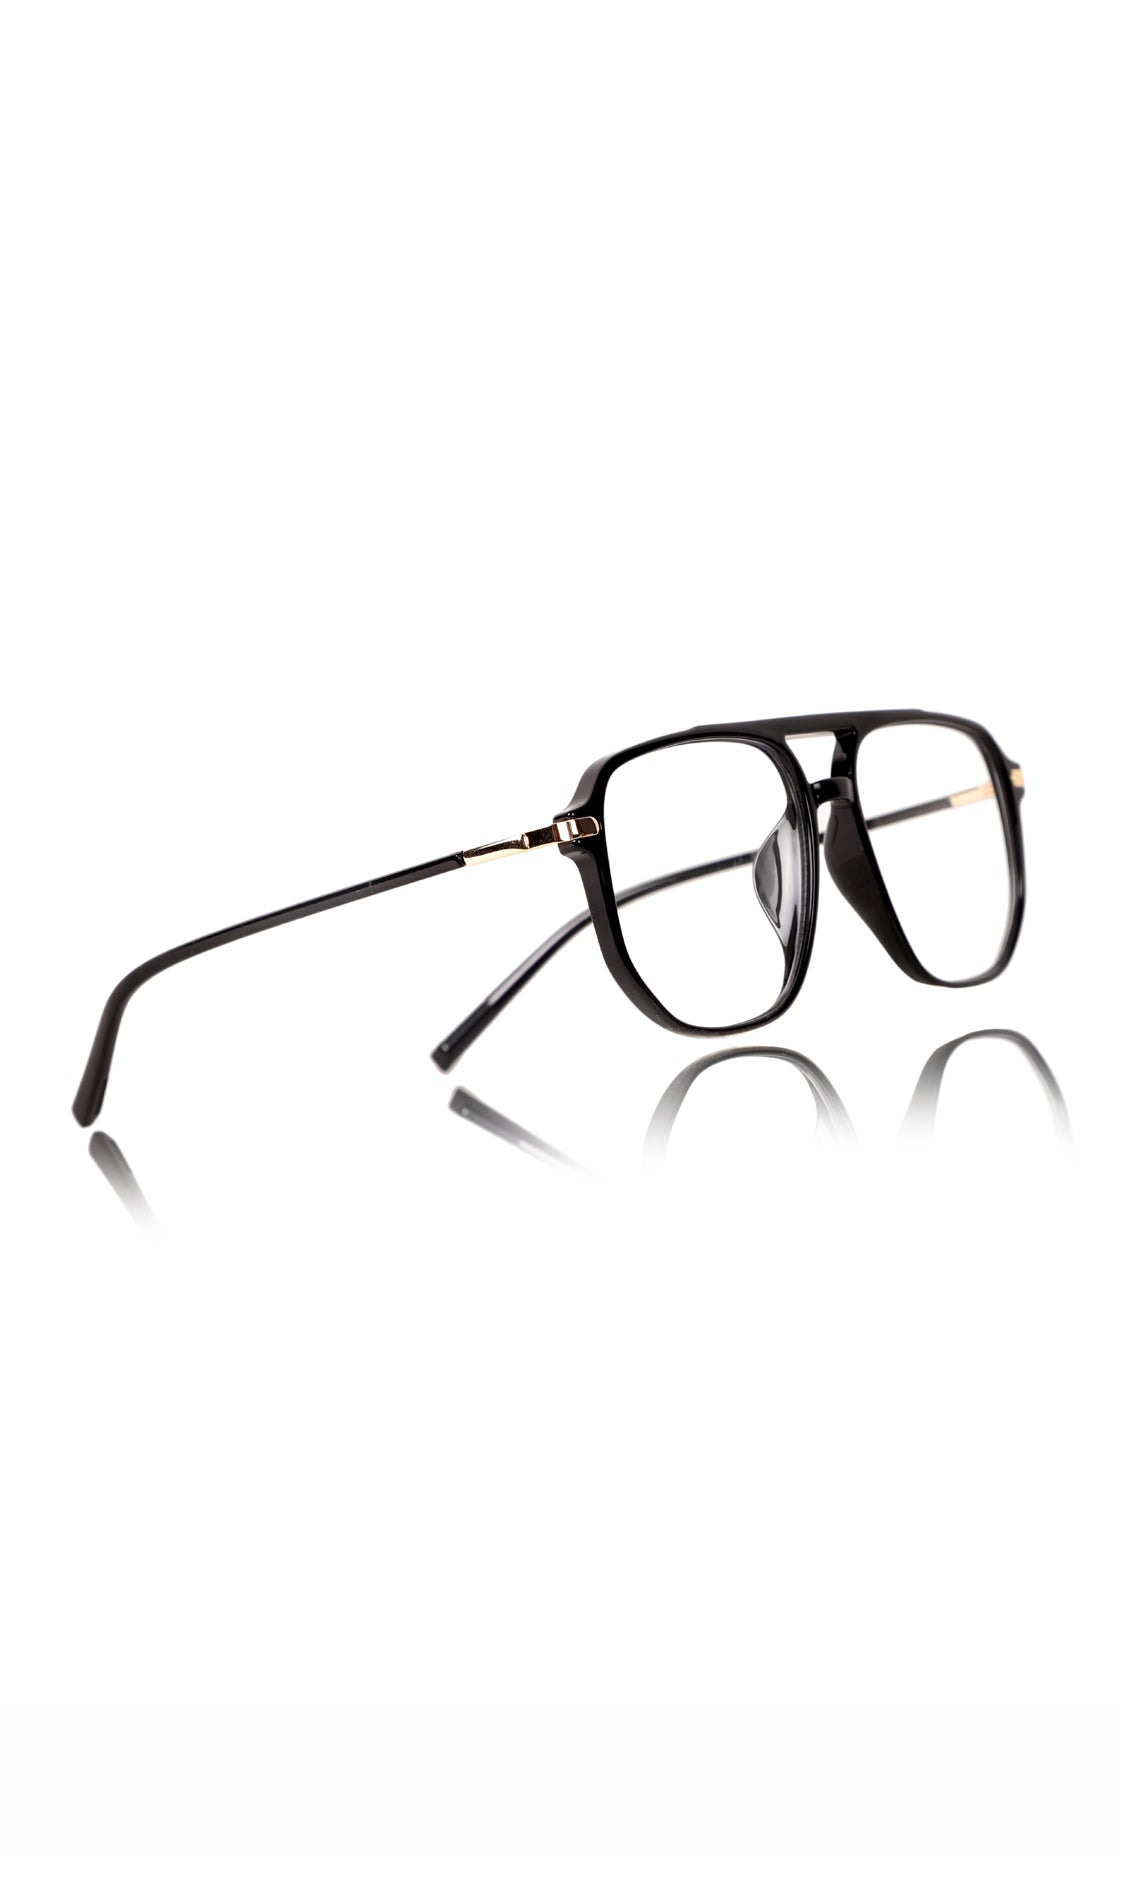 Jodykoes® Premium Oversized Eyeglass Frames: Stylish Anti-Glare and Blue Light Blocking Glasses for Enhanced Computer and Mobile Phone Protection, Unisex Design (Black)